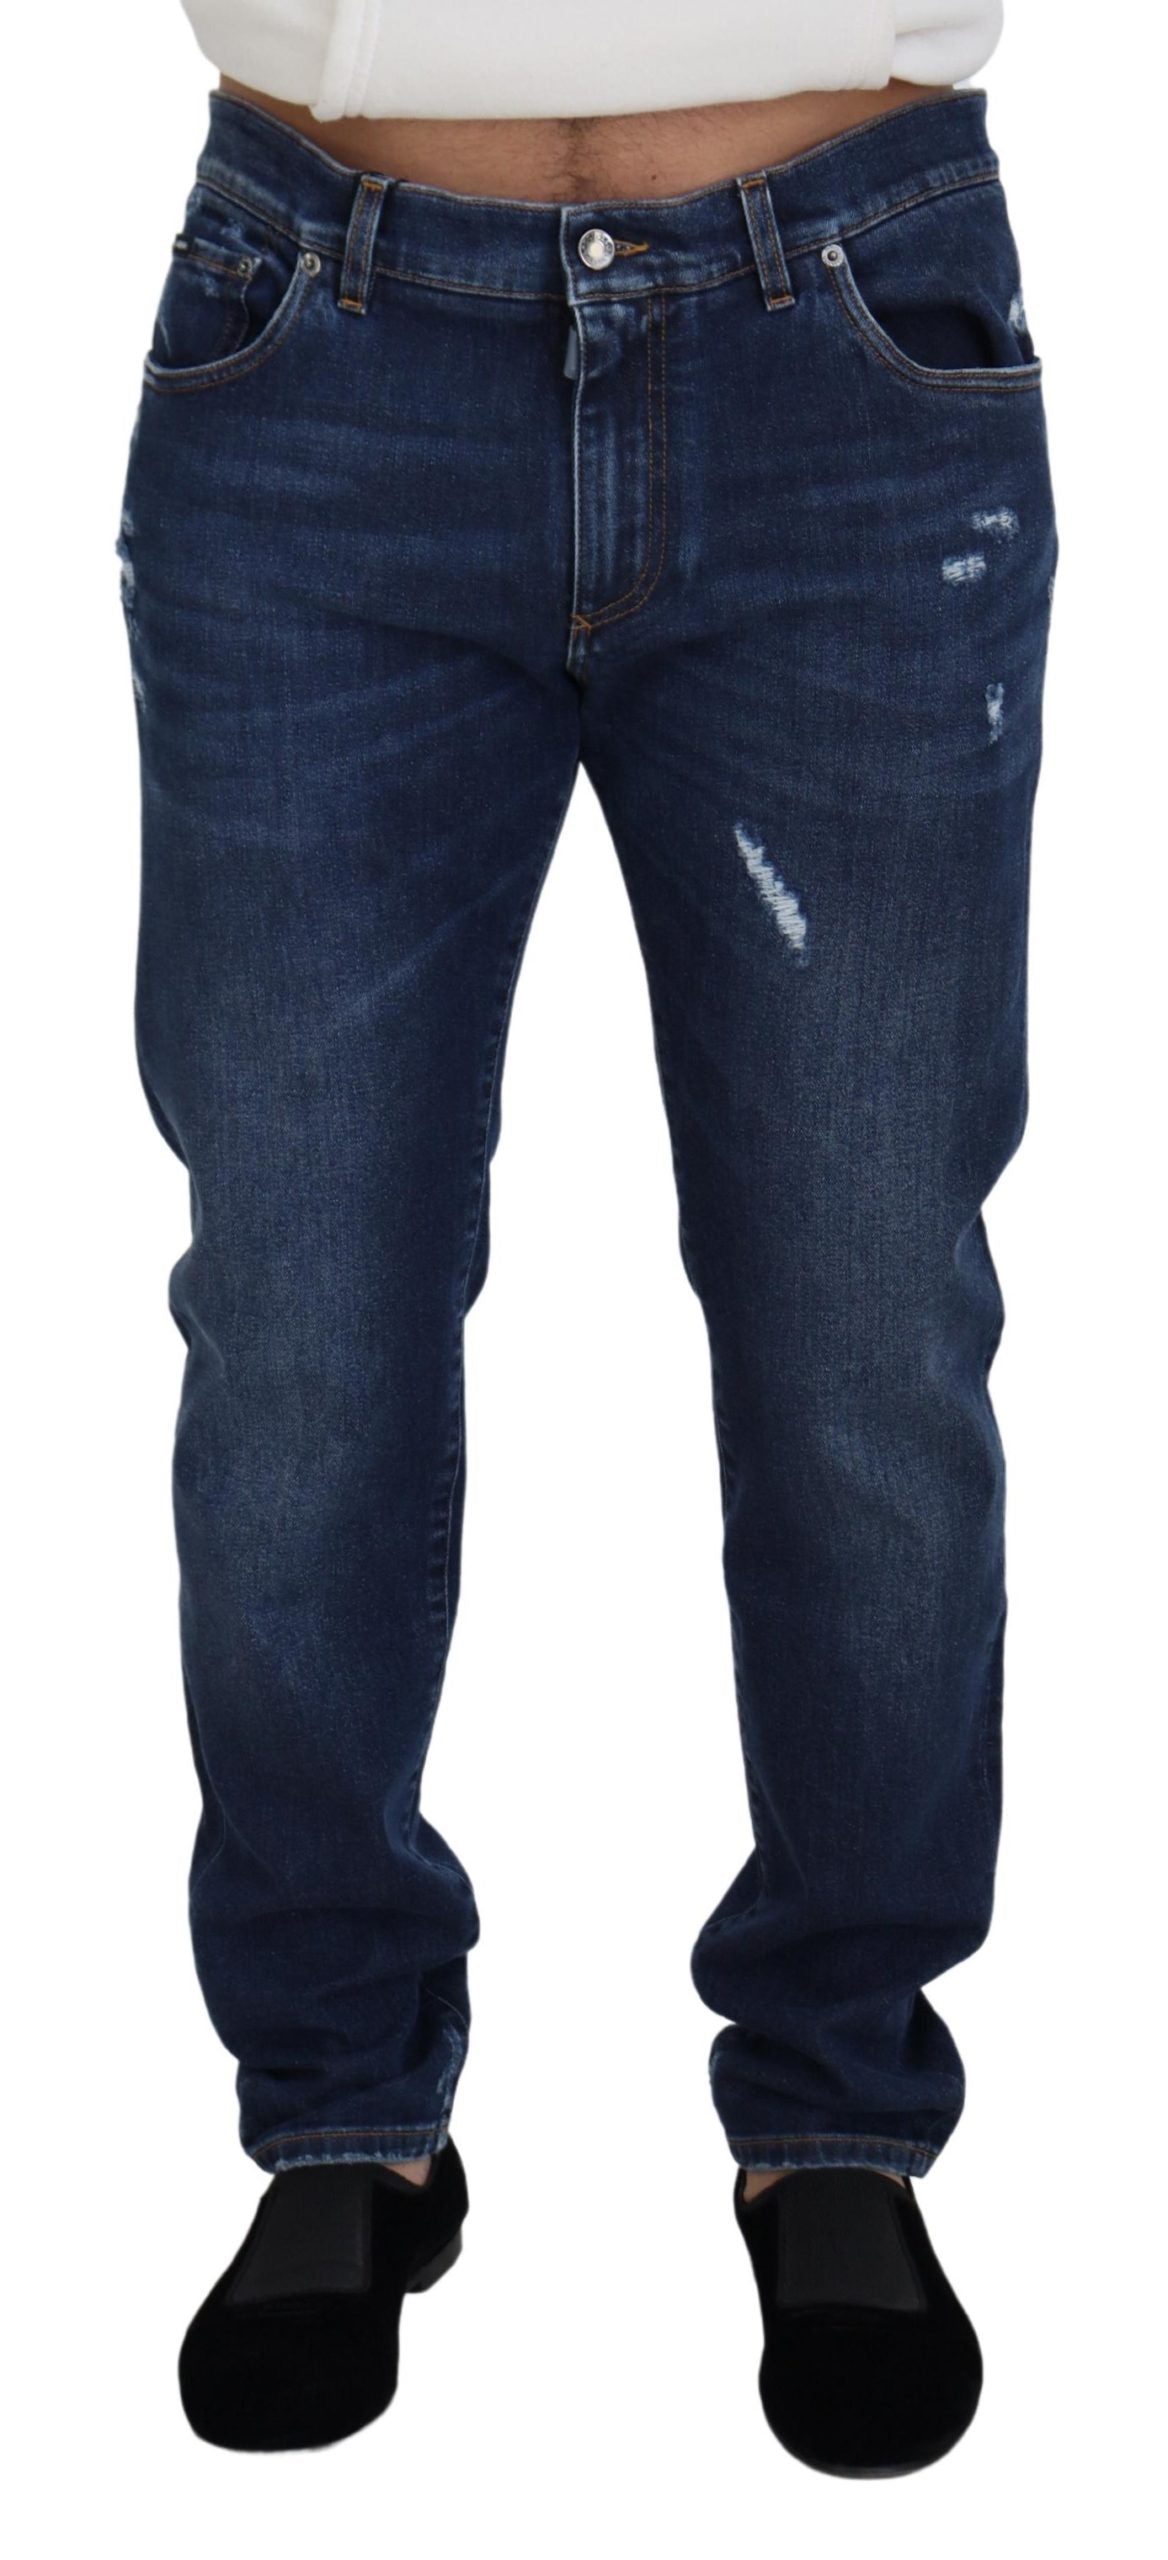 Blue Washed Cotton Casual Denim Jeans Pant